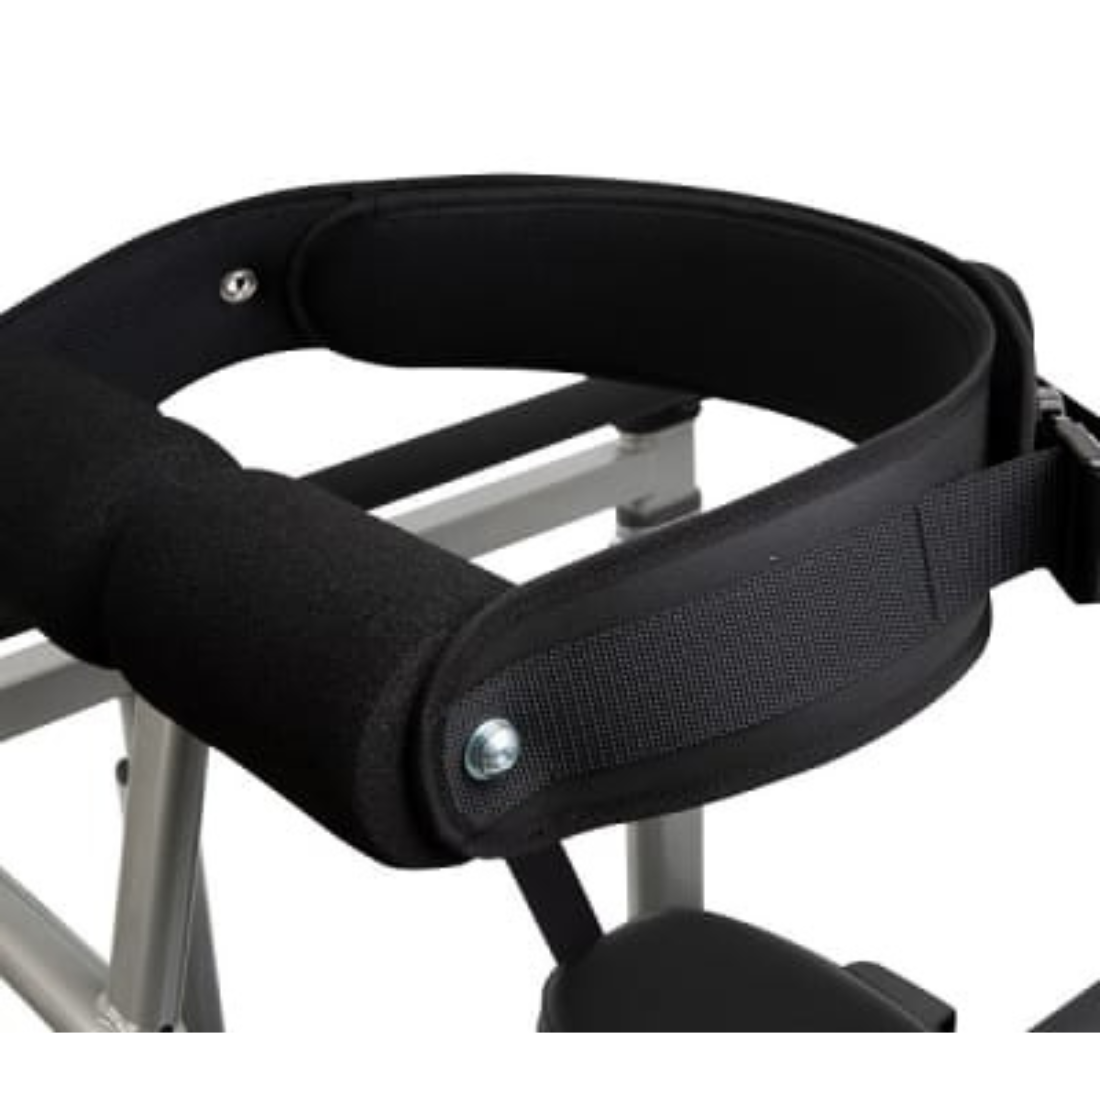 lw650 treadmill safety belt